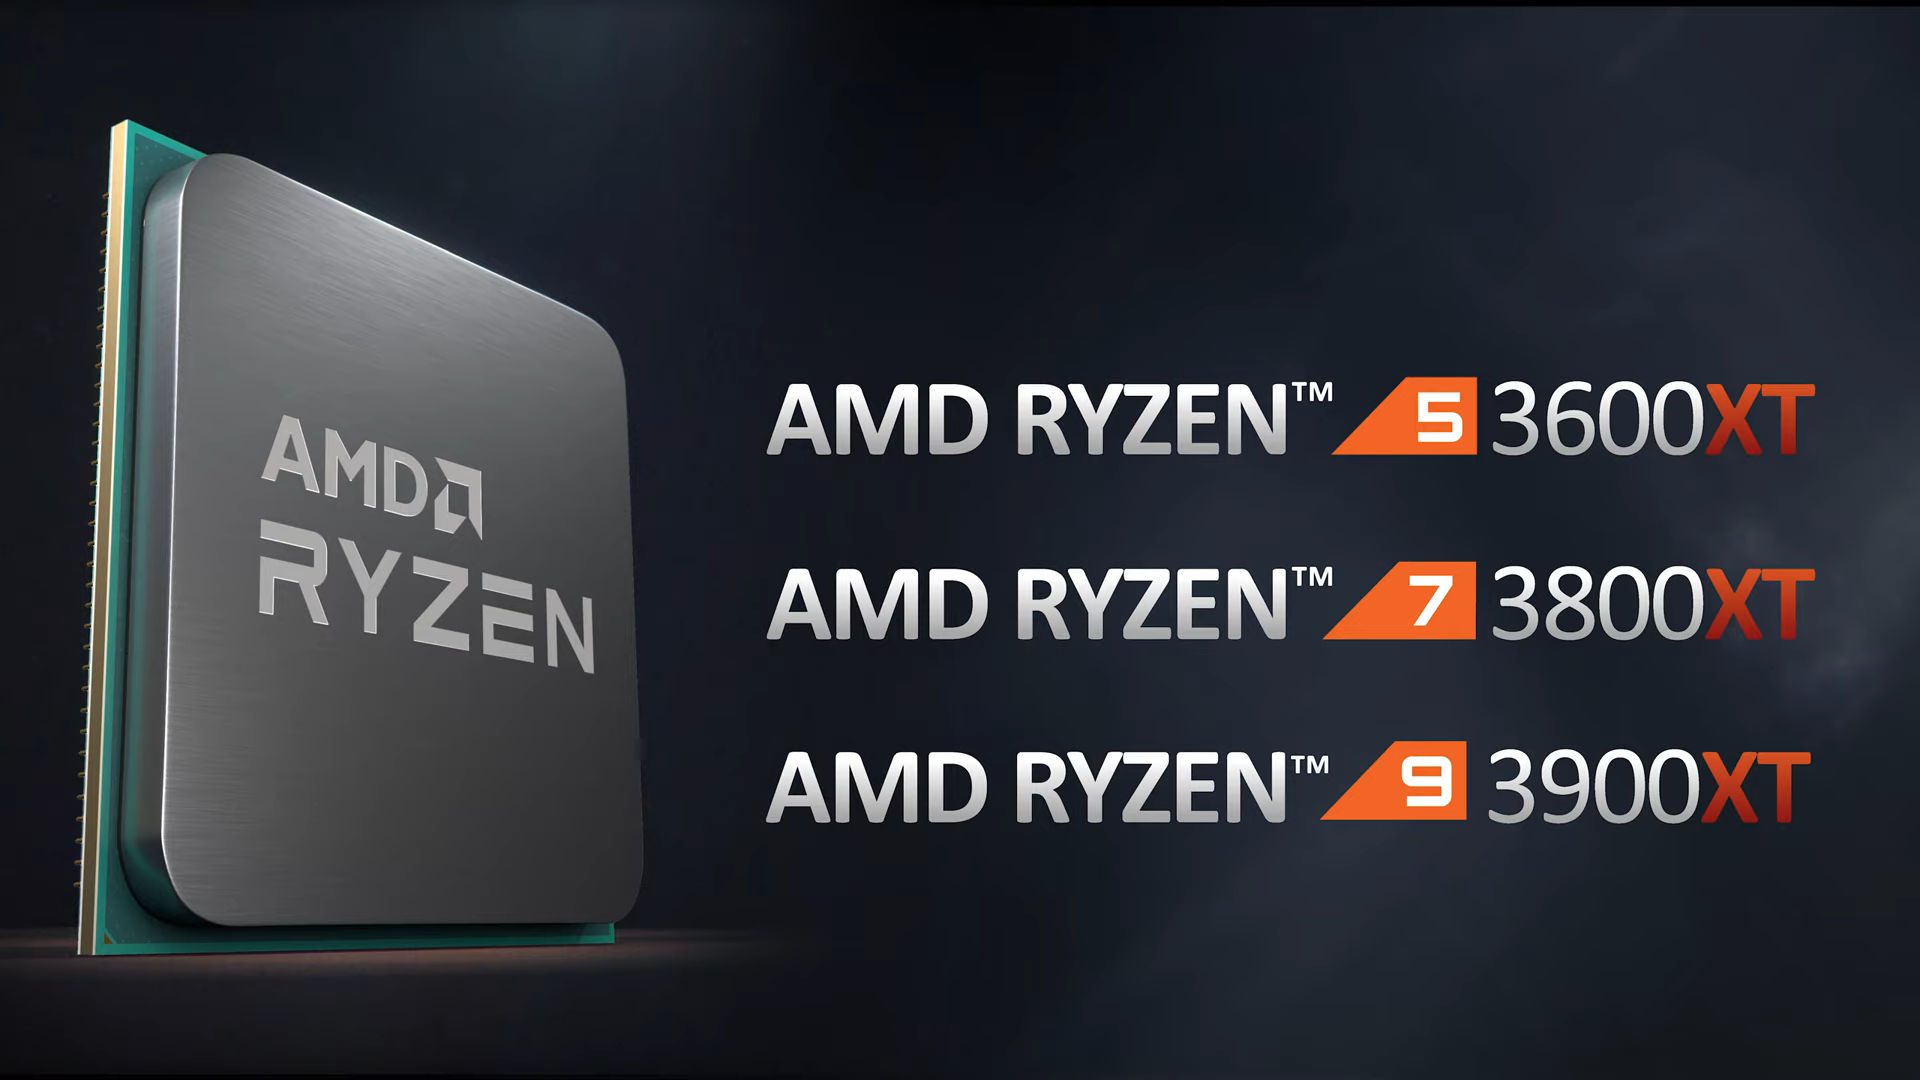 AMD تعلن رسمياً عن سلسلة معالجات Ryzen 3000XT بترددات وأداء محسن